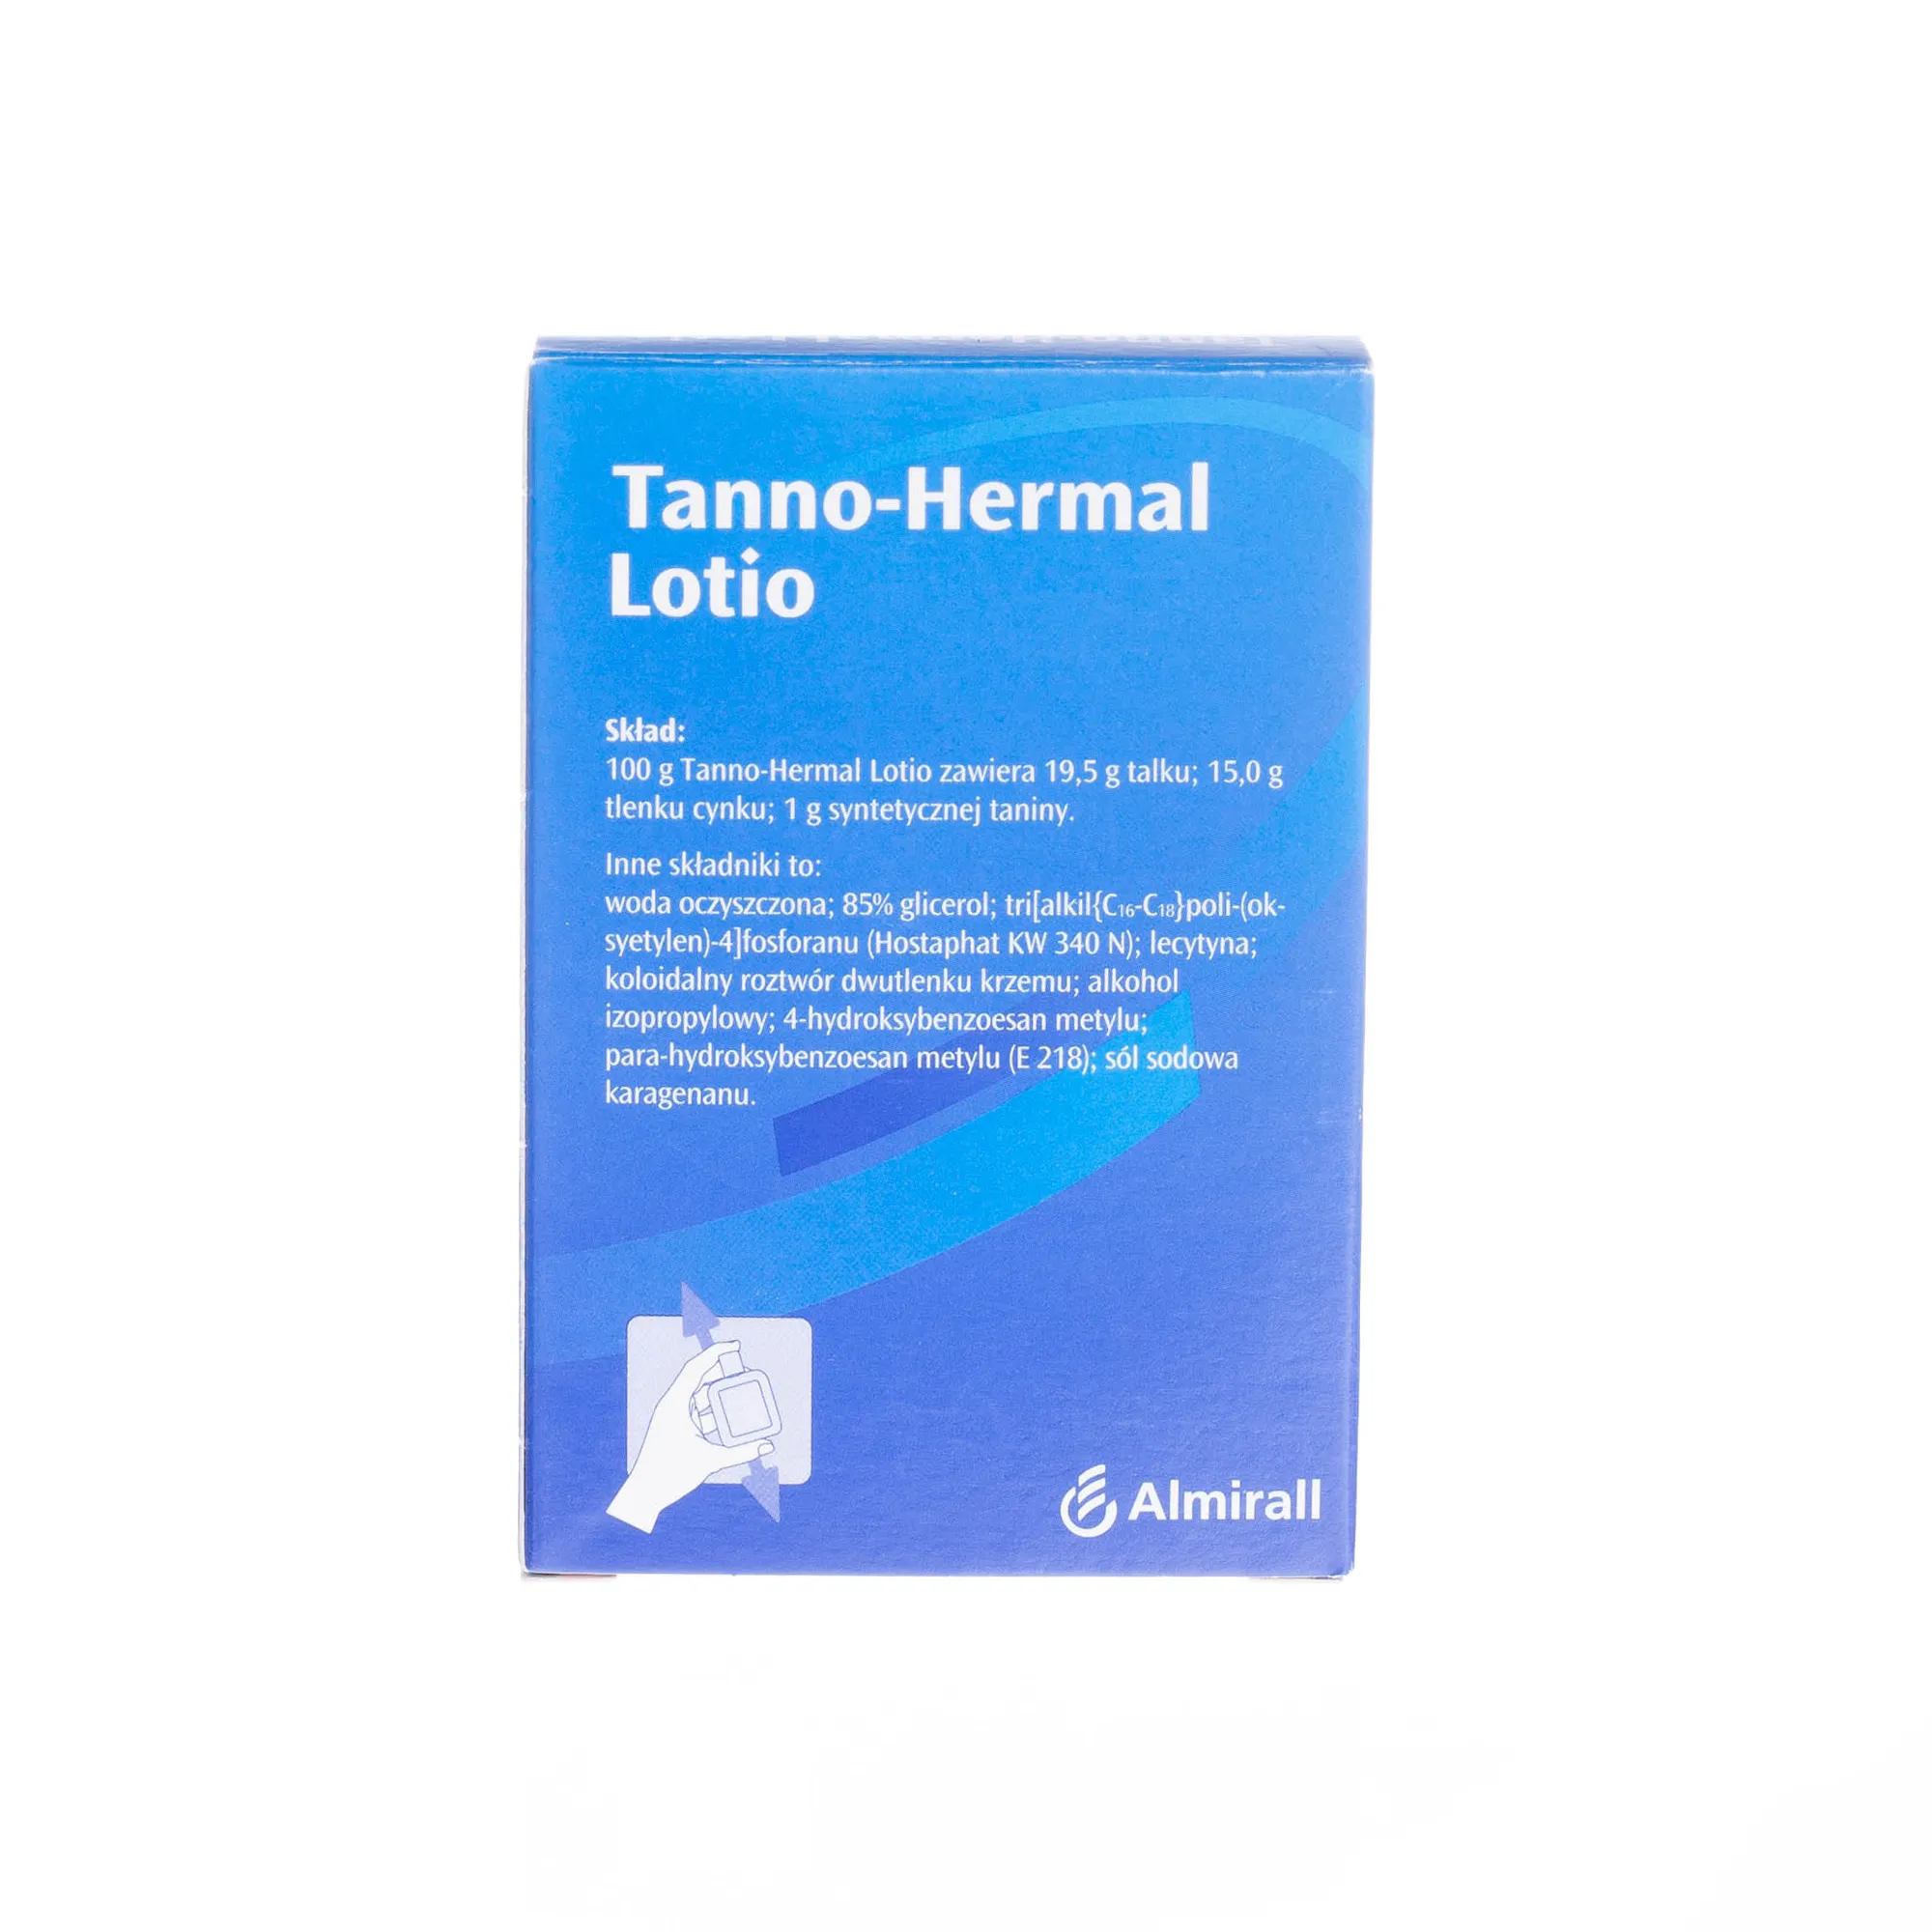 Tanno-Hermal Lotio, 100 g 